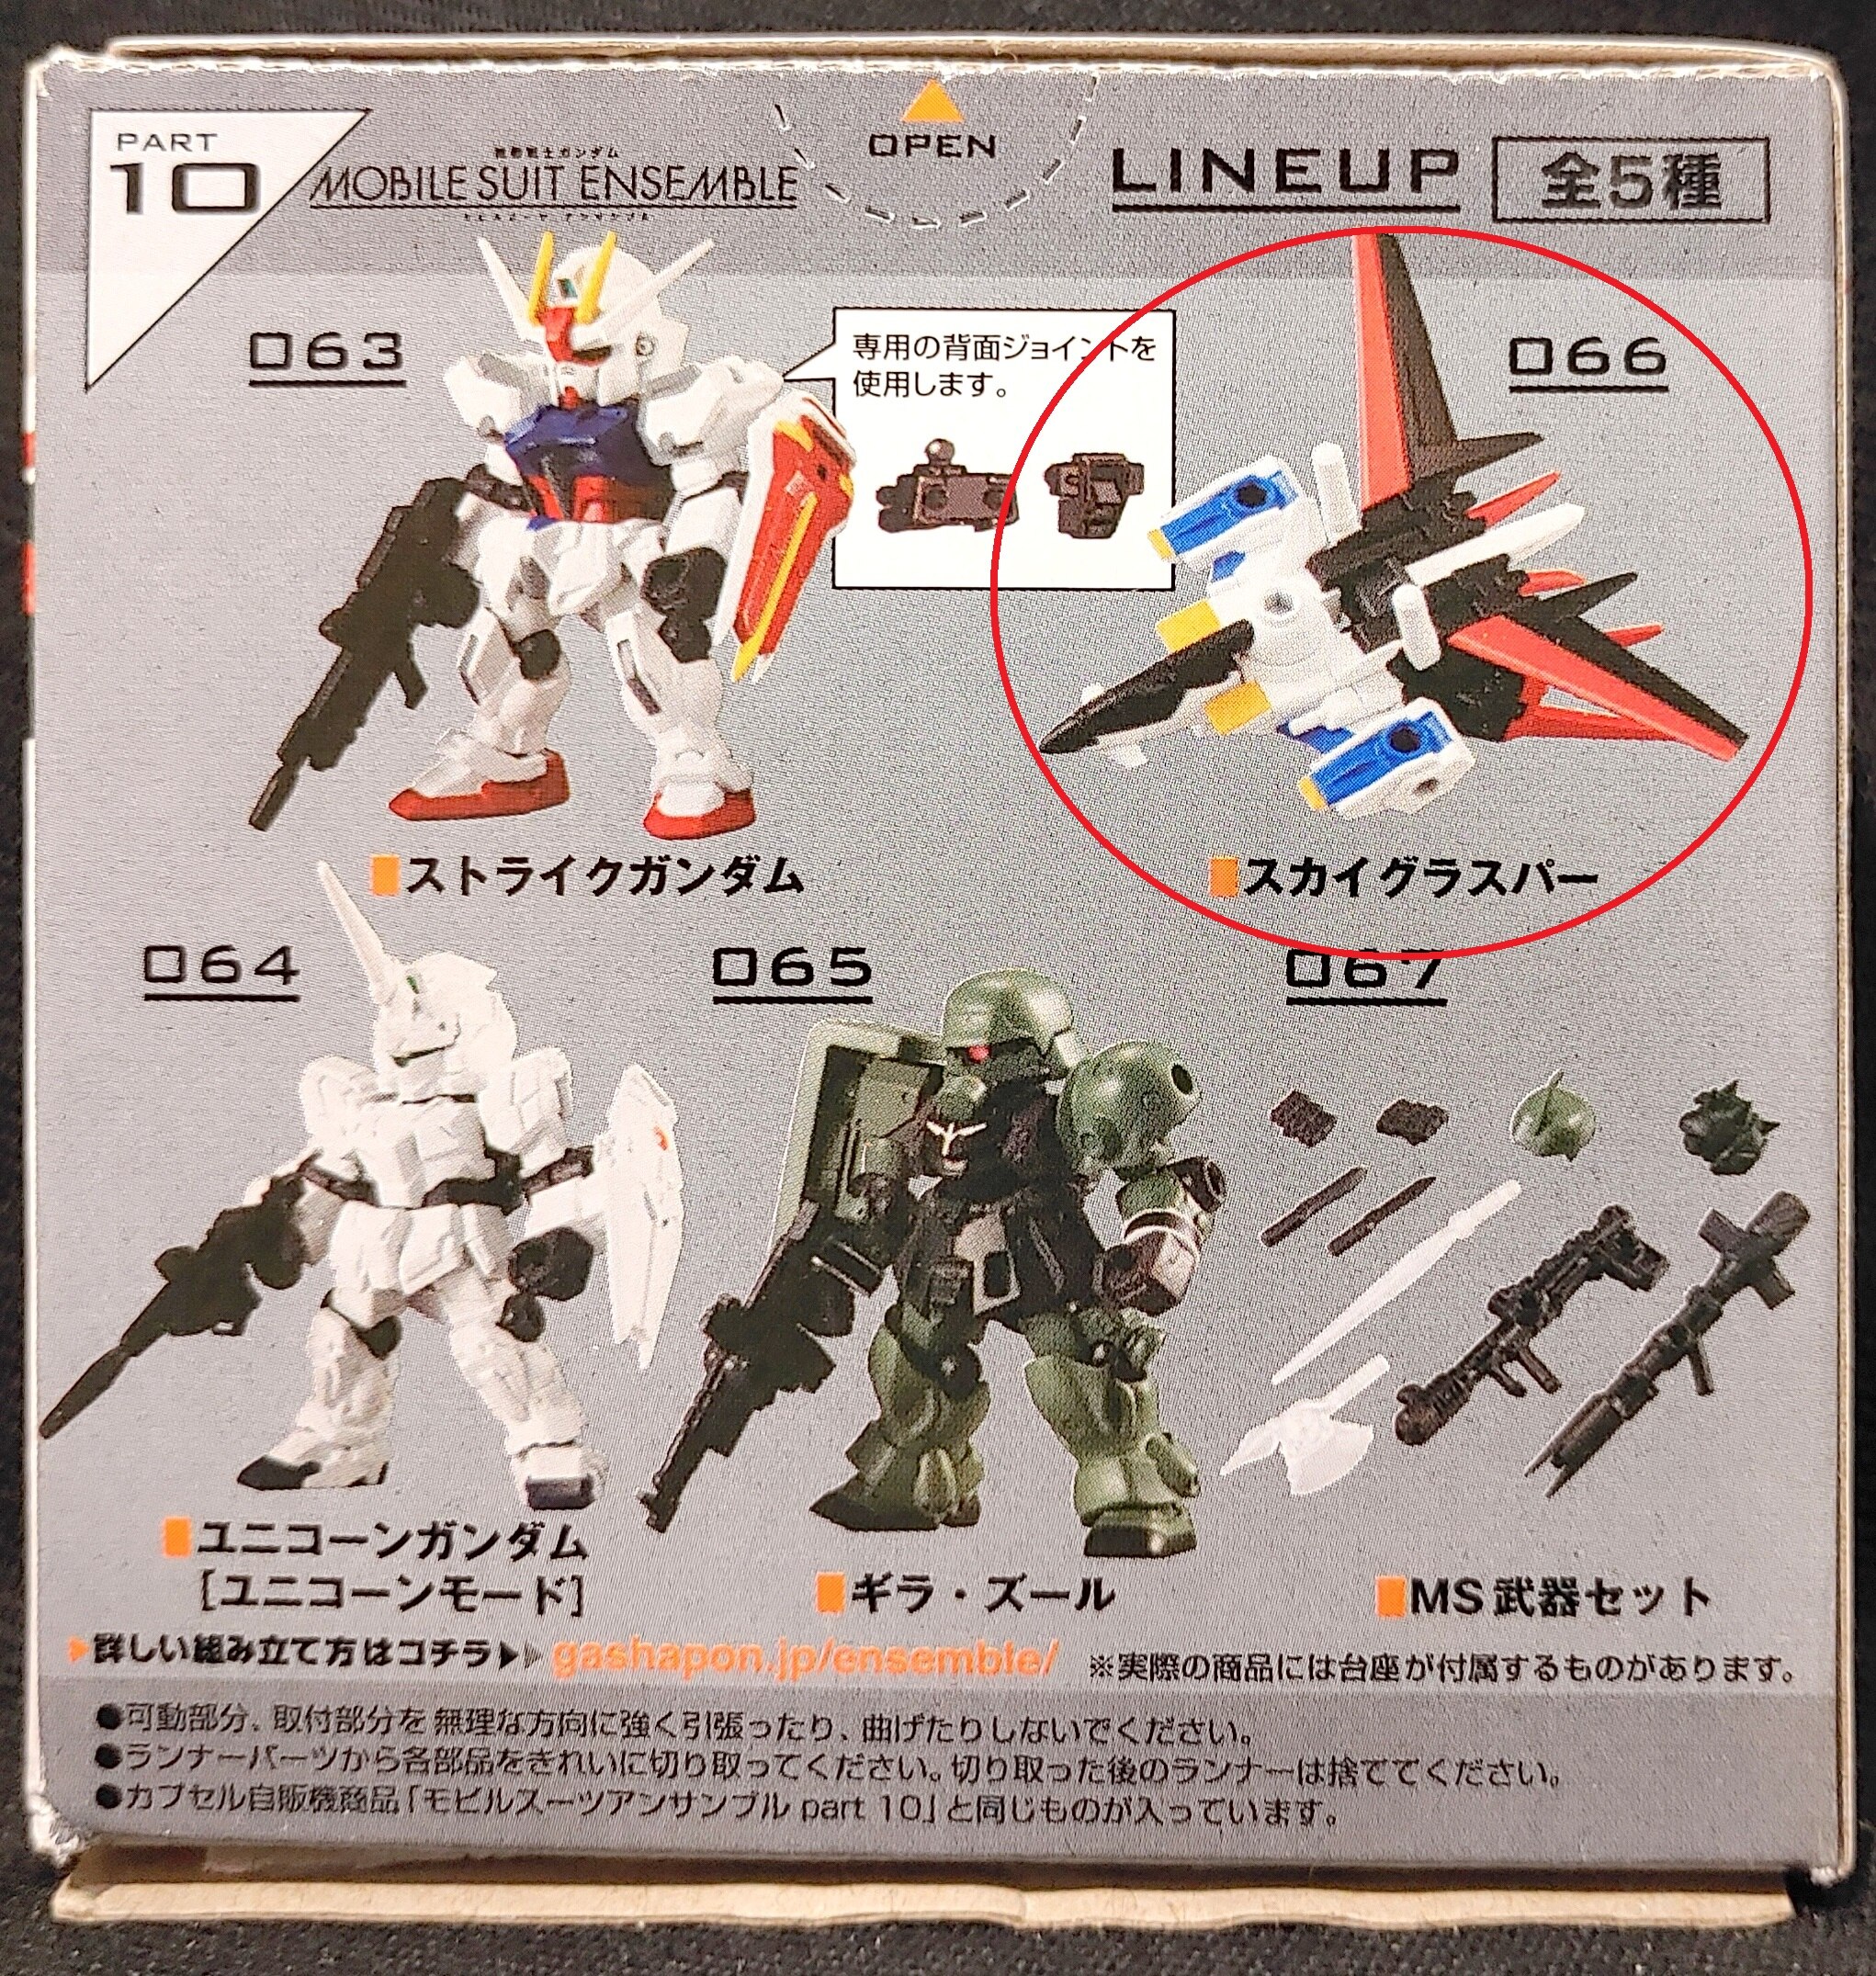 Bandai Mobile Suit Gundam Mobile Suit Ensemble 10 Fx 550 Skygrasper Mandarake Online Shop